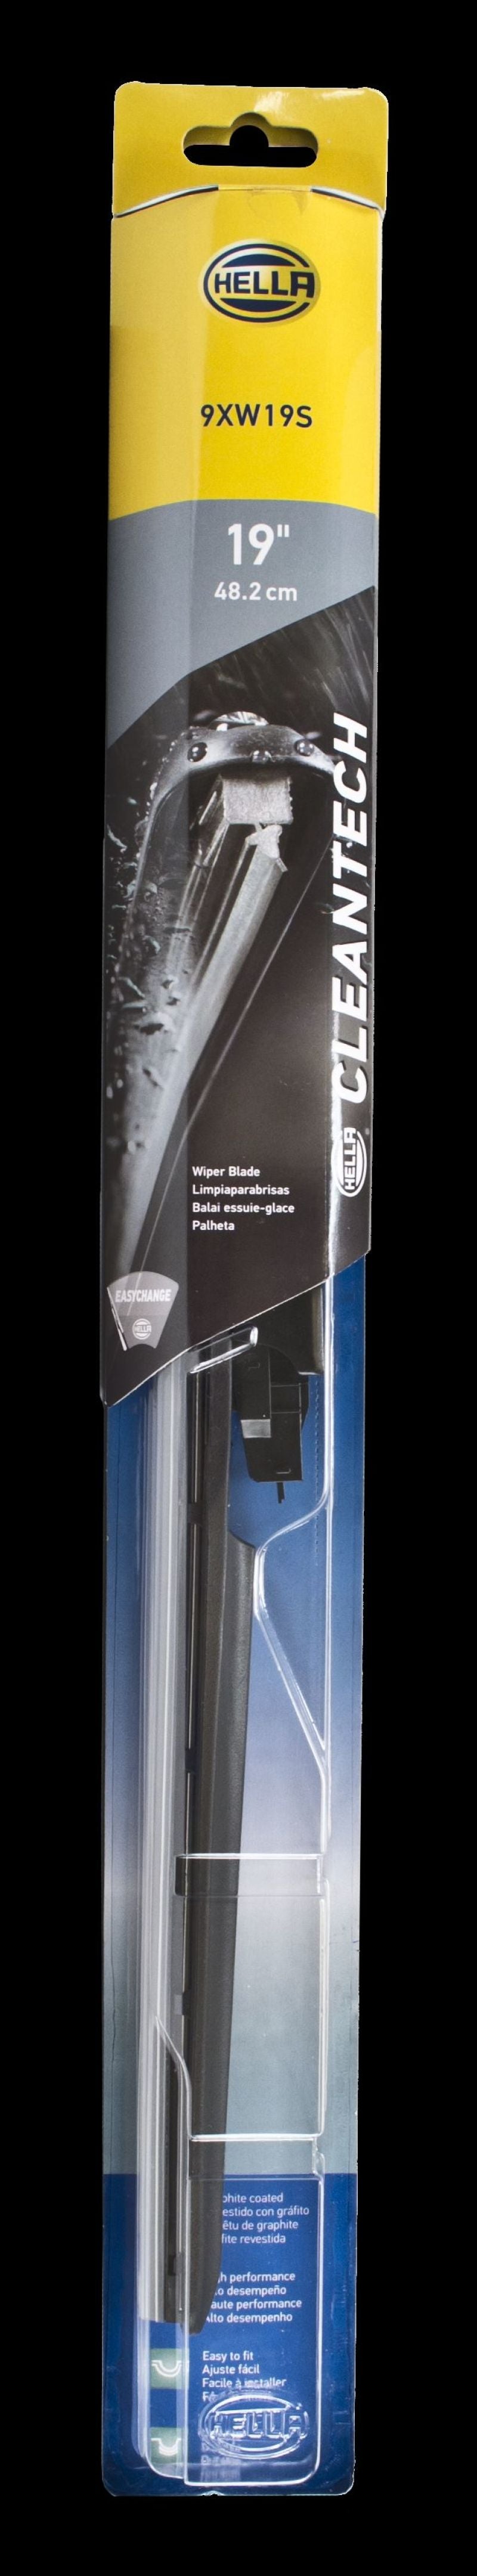 Hella Clean Tech Wiper Blade 19in - Single - eliteracefab.com